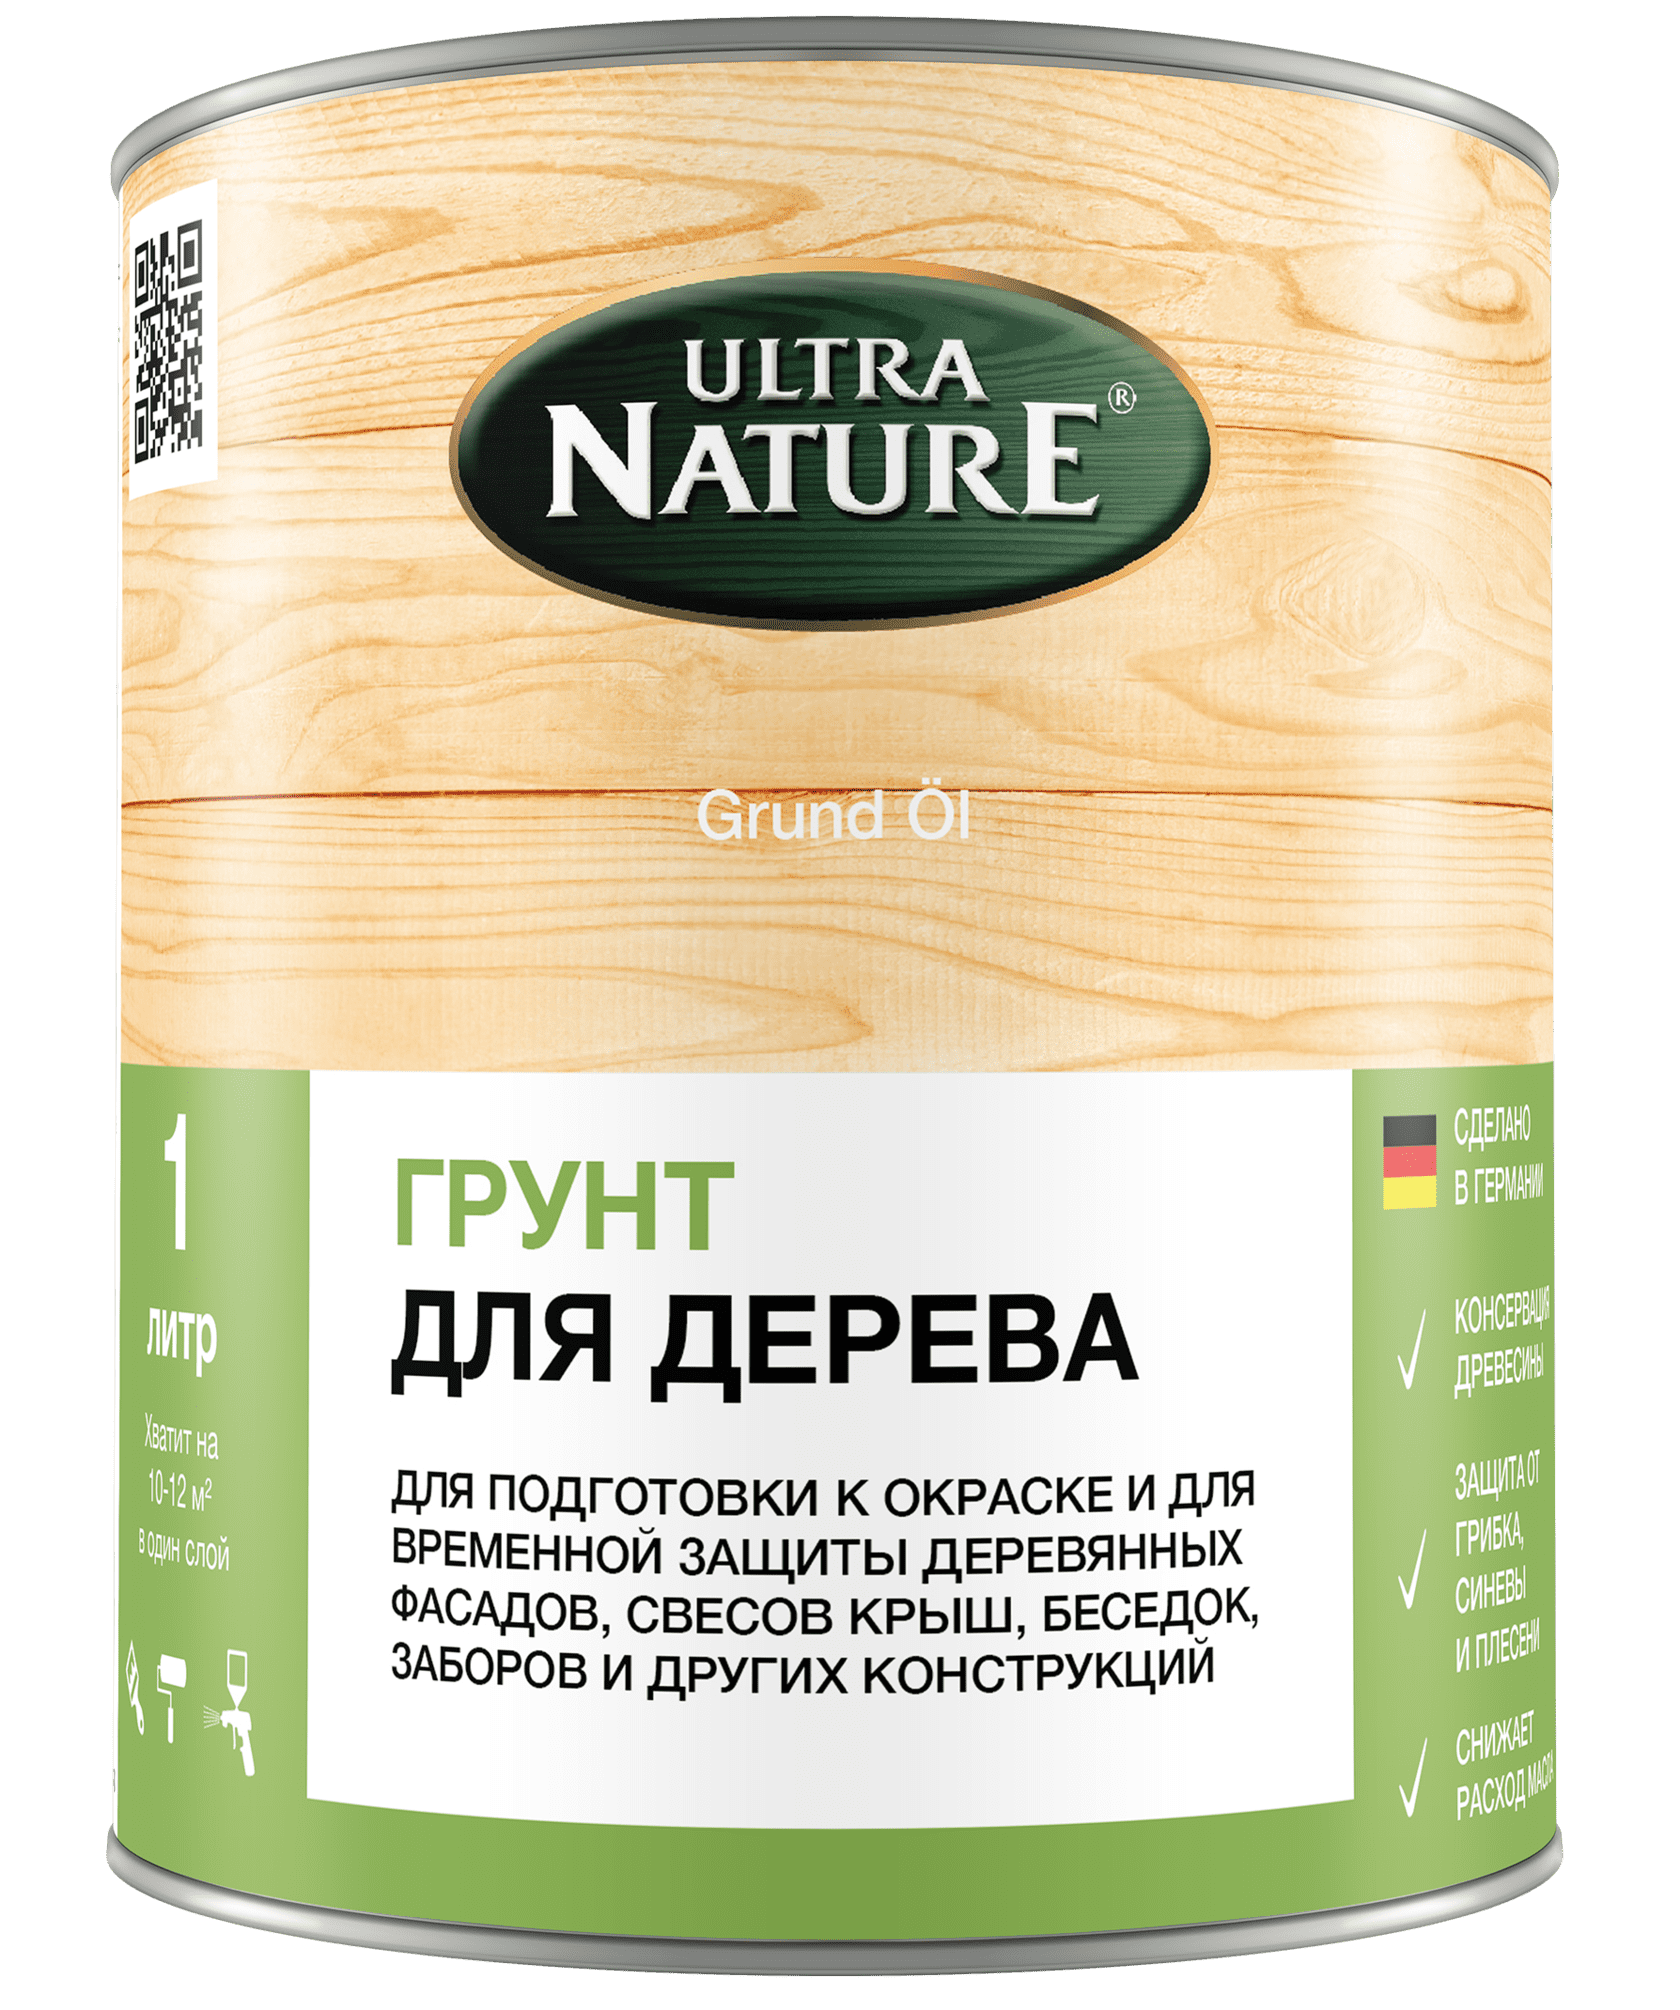 Ultra natural. 877 Грунт Ultra nature 10л. 877 Грунт для дерева 10. Ultra nature масло для дерева. Защитный грунт-масло GNATURE 10л.